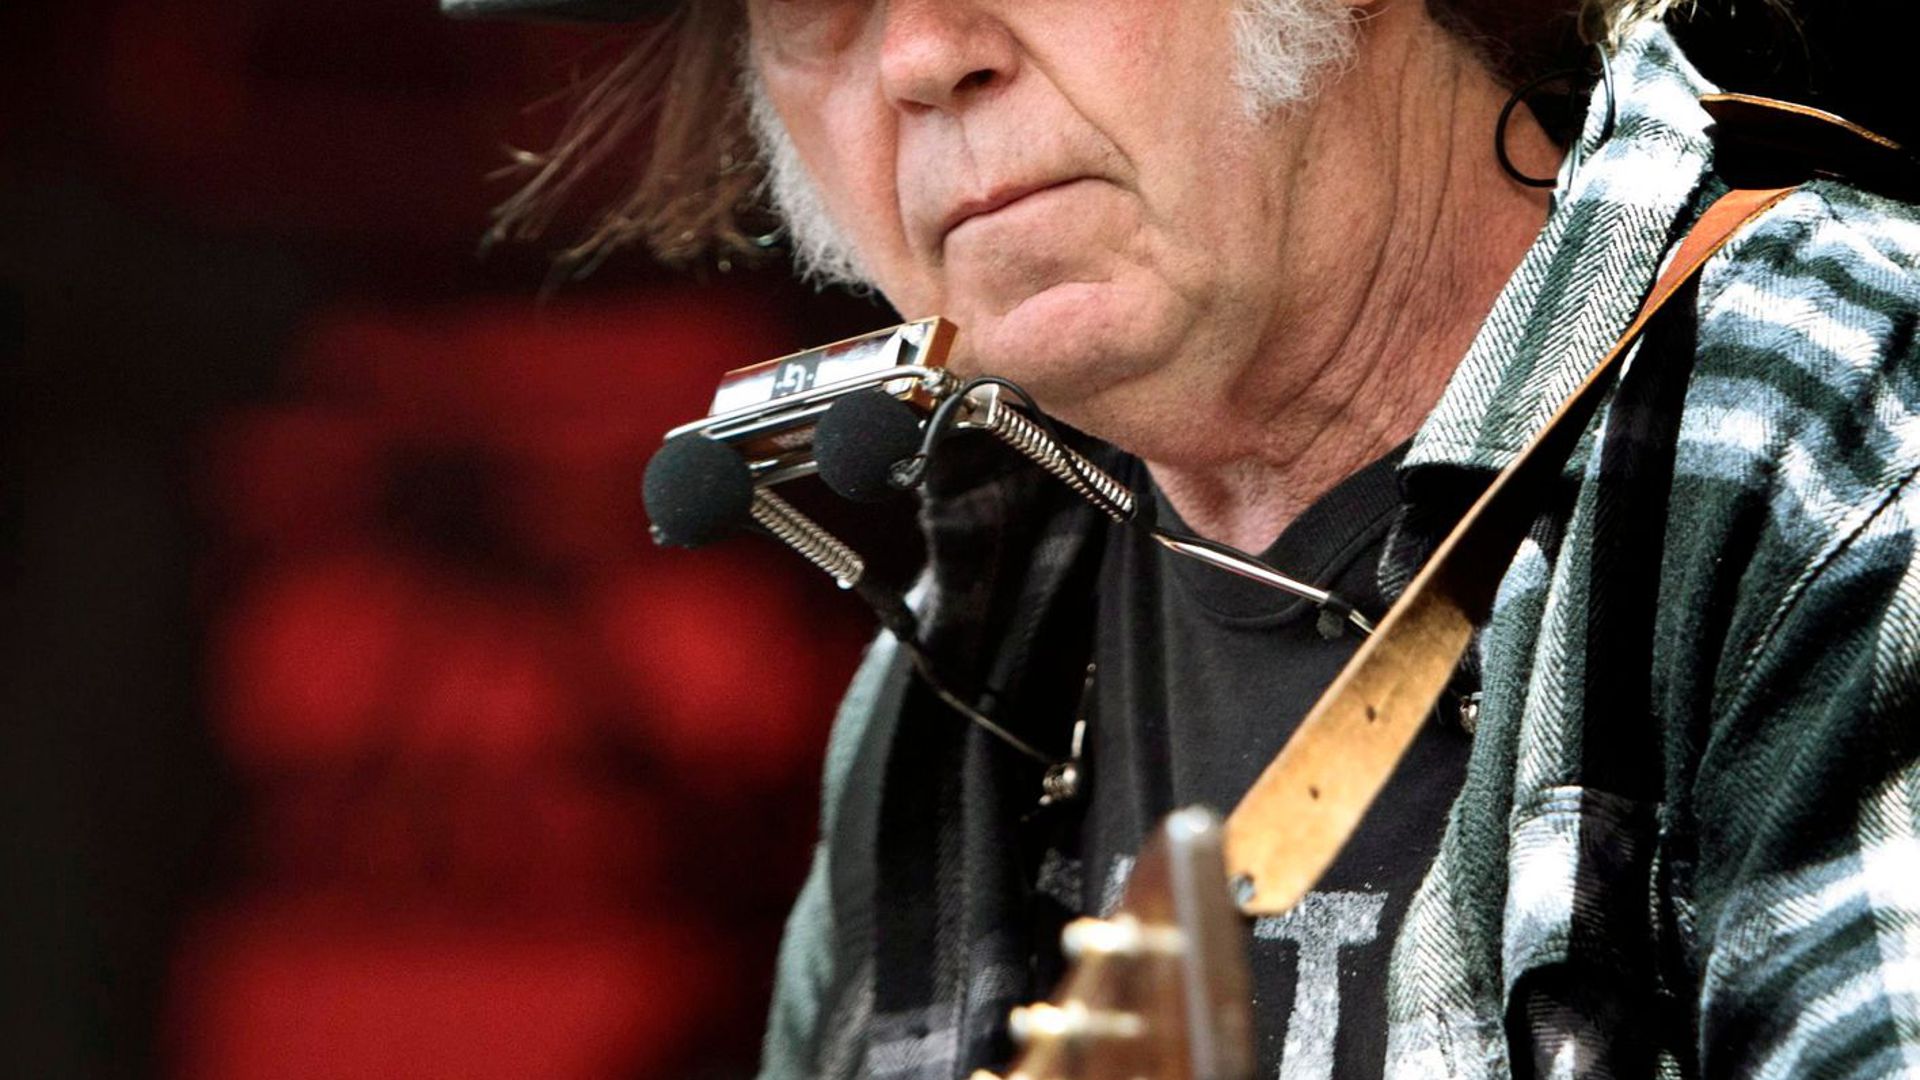 Rockstar Neil Young klagt gegen US-Präsident Donald Trump.